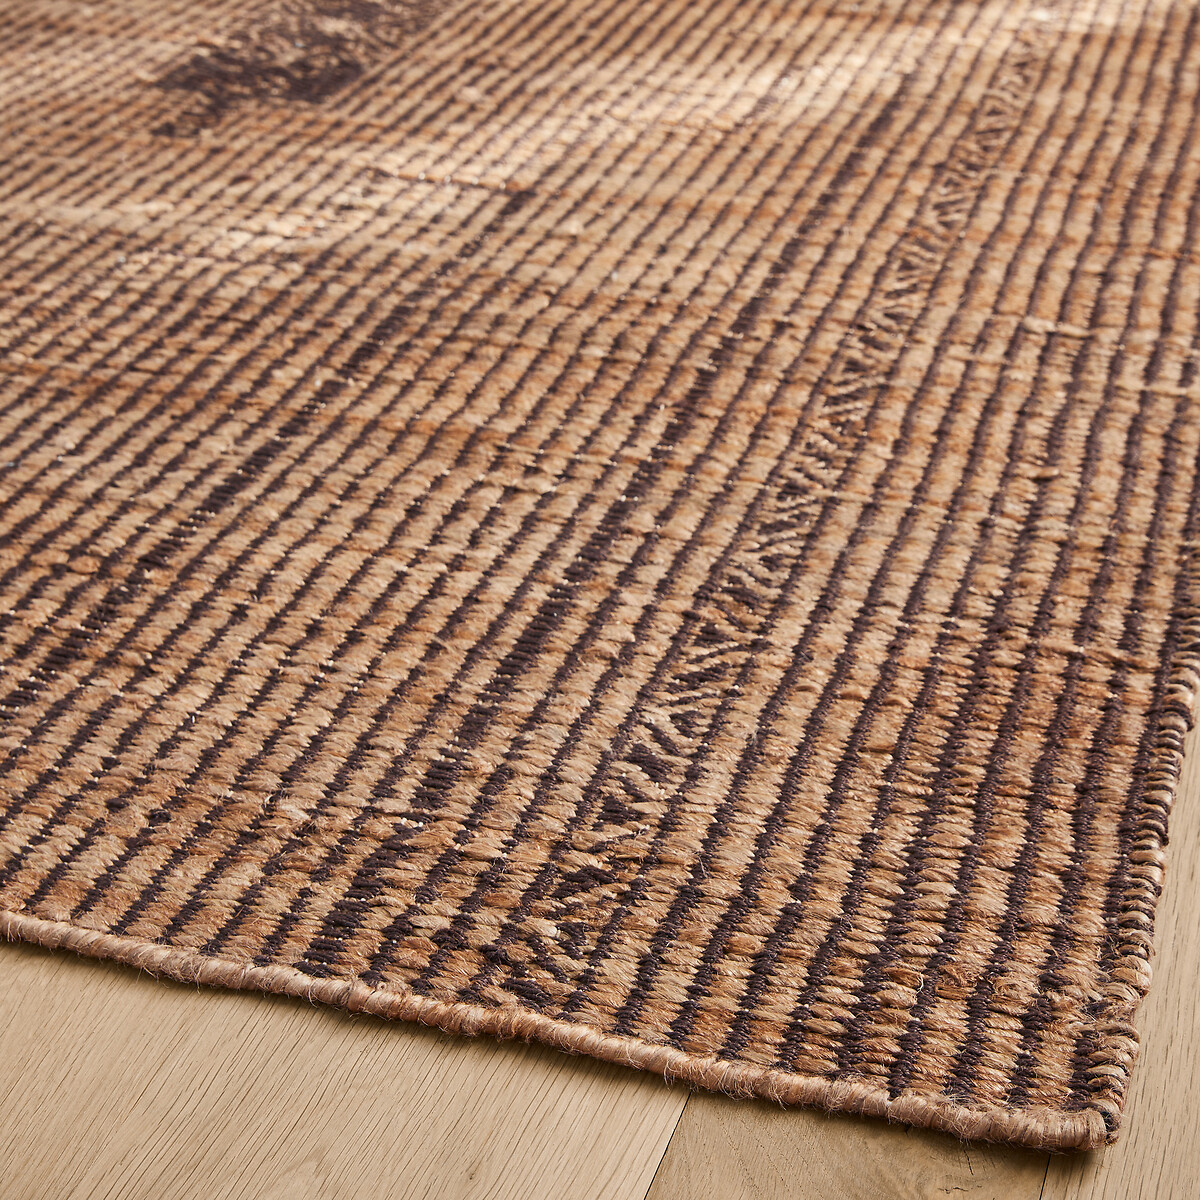 Ковер из плетеной ткани из джута и хлопка Jutiss  200 x 290 см бежевый LaRedoute, размер 200 x 290 см - фото 3